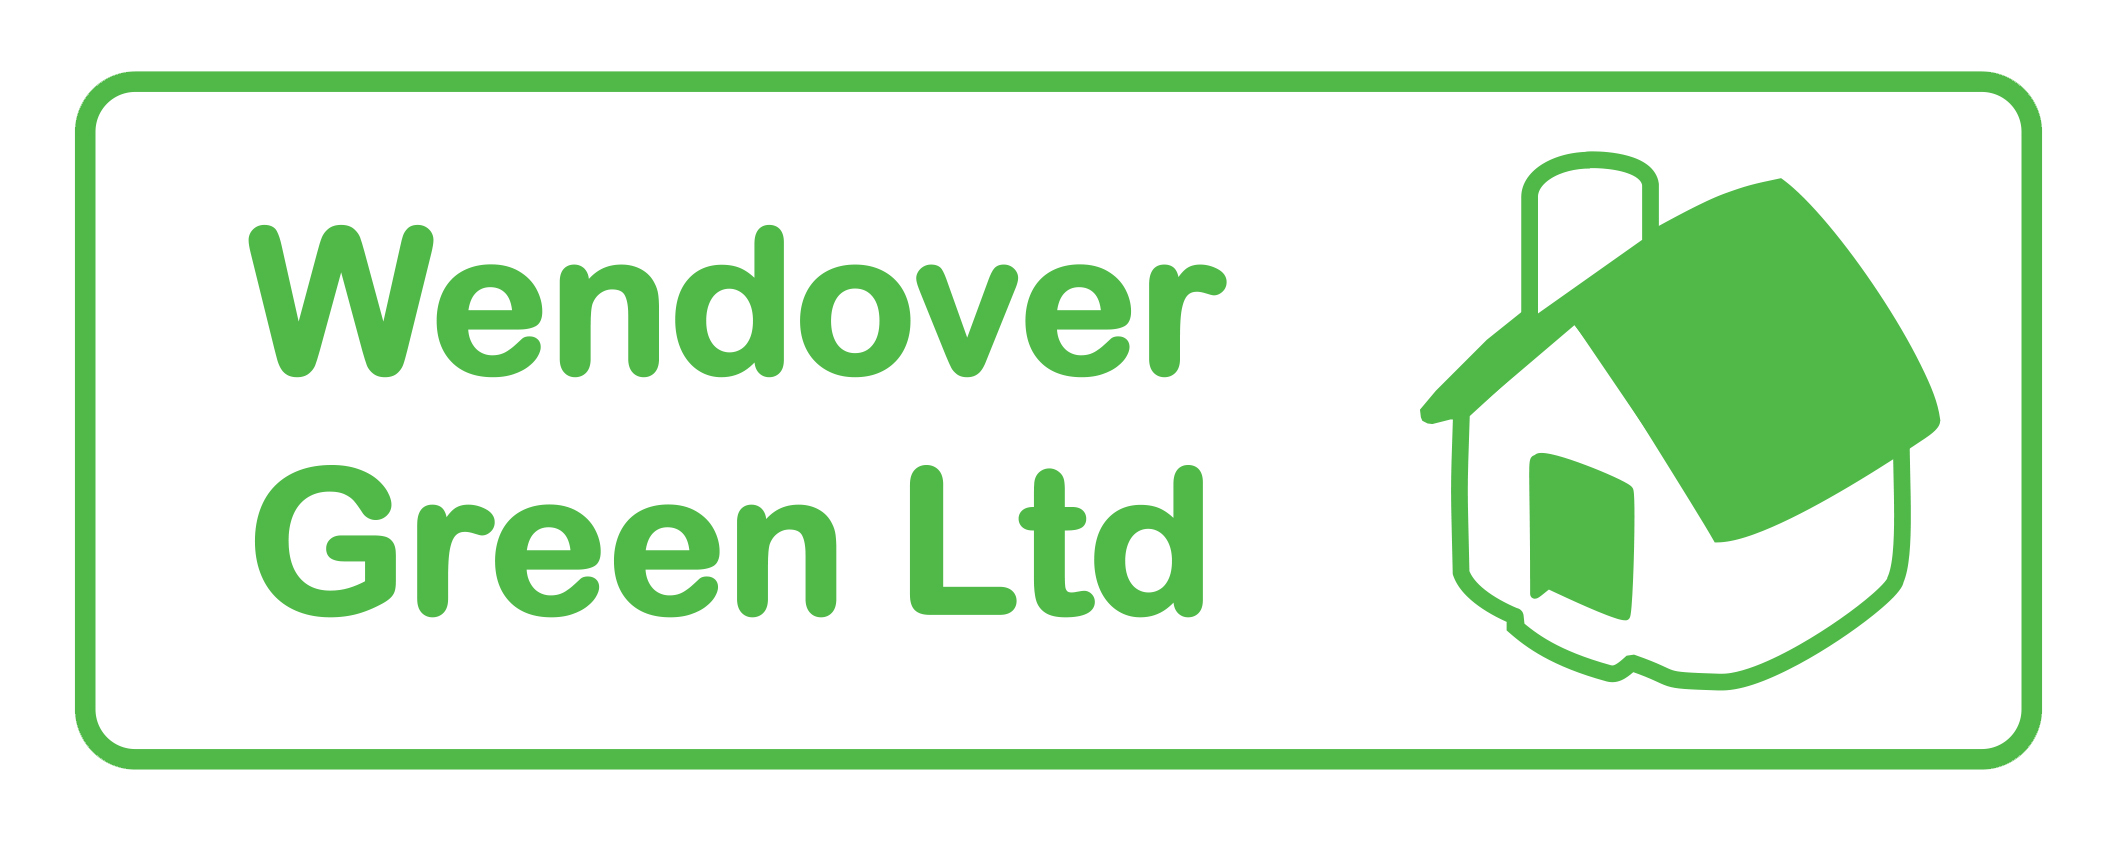 Organisation Logo - Wendover Green Ltd